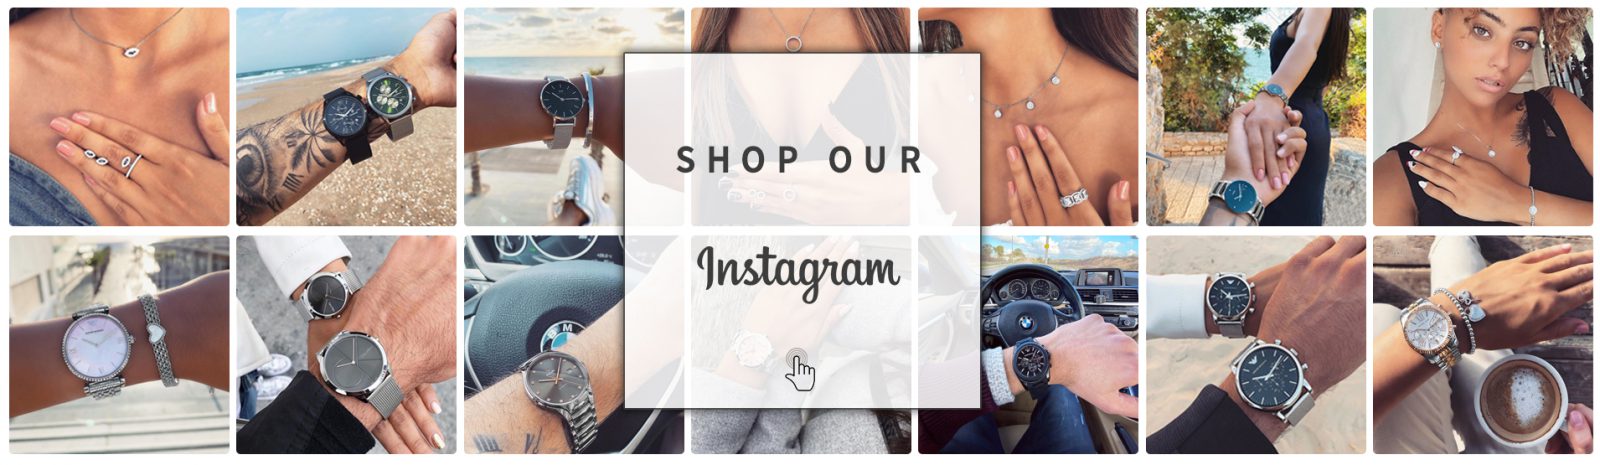 shop-our-instagram-באנר-ספרינג